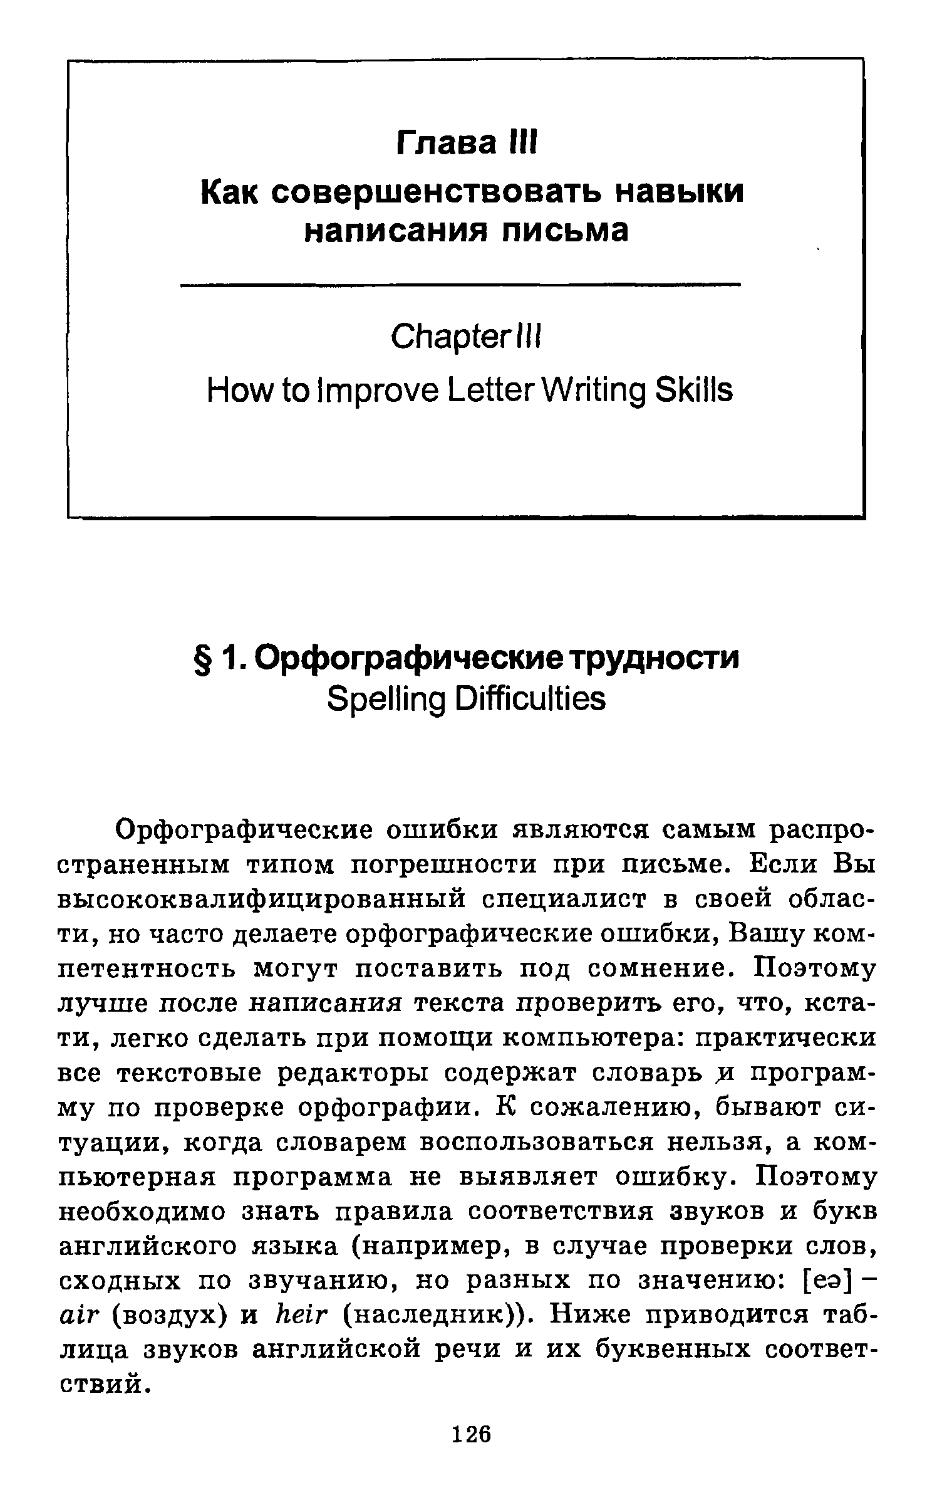 Глава III. Как совершенствовать навыки написания письма. Chapter III. How to Improve Letter Writing Skils